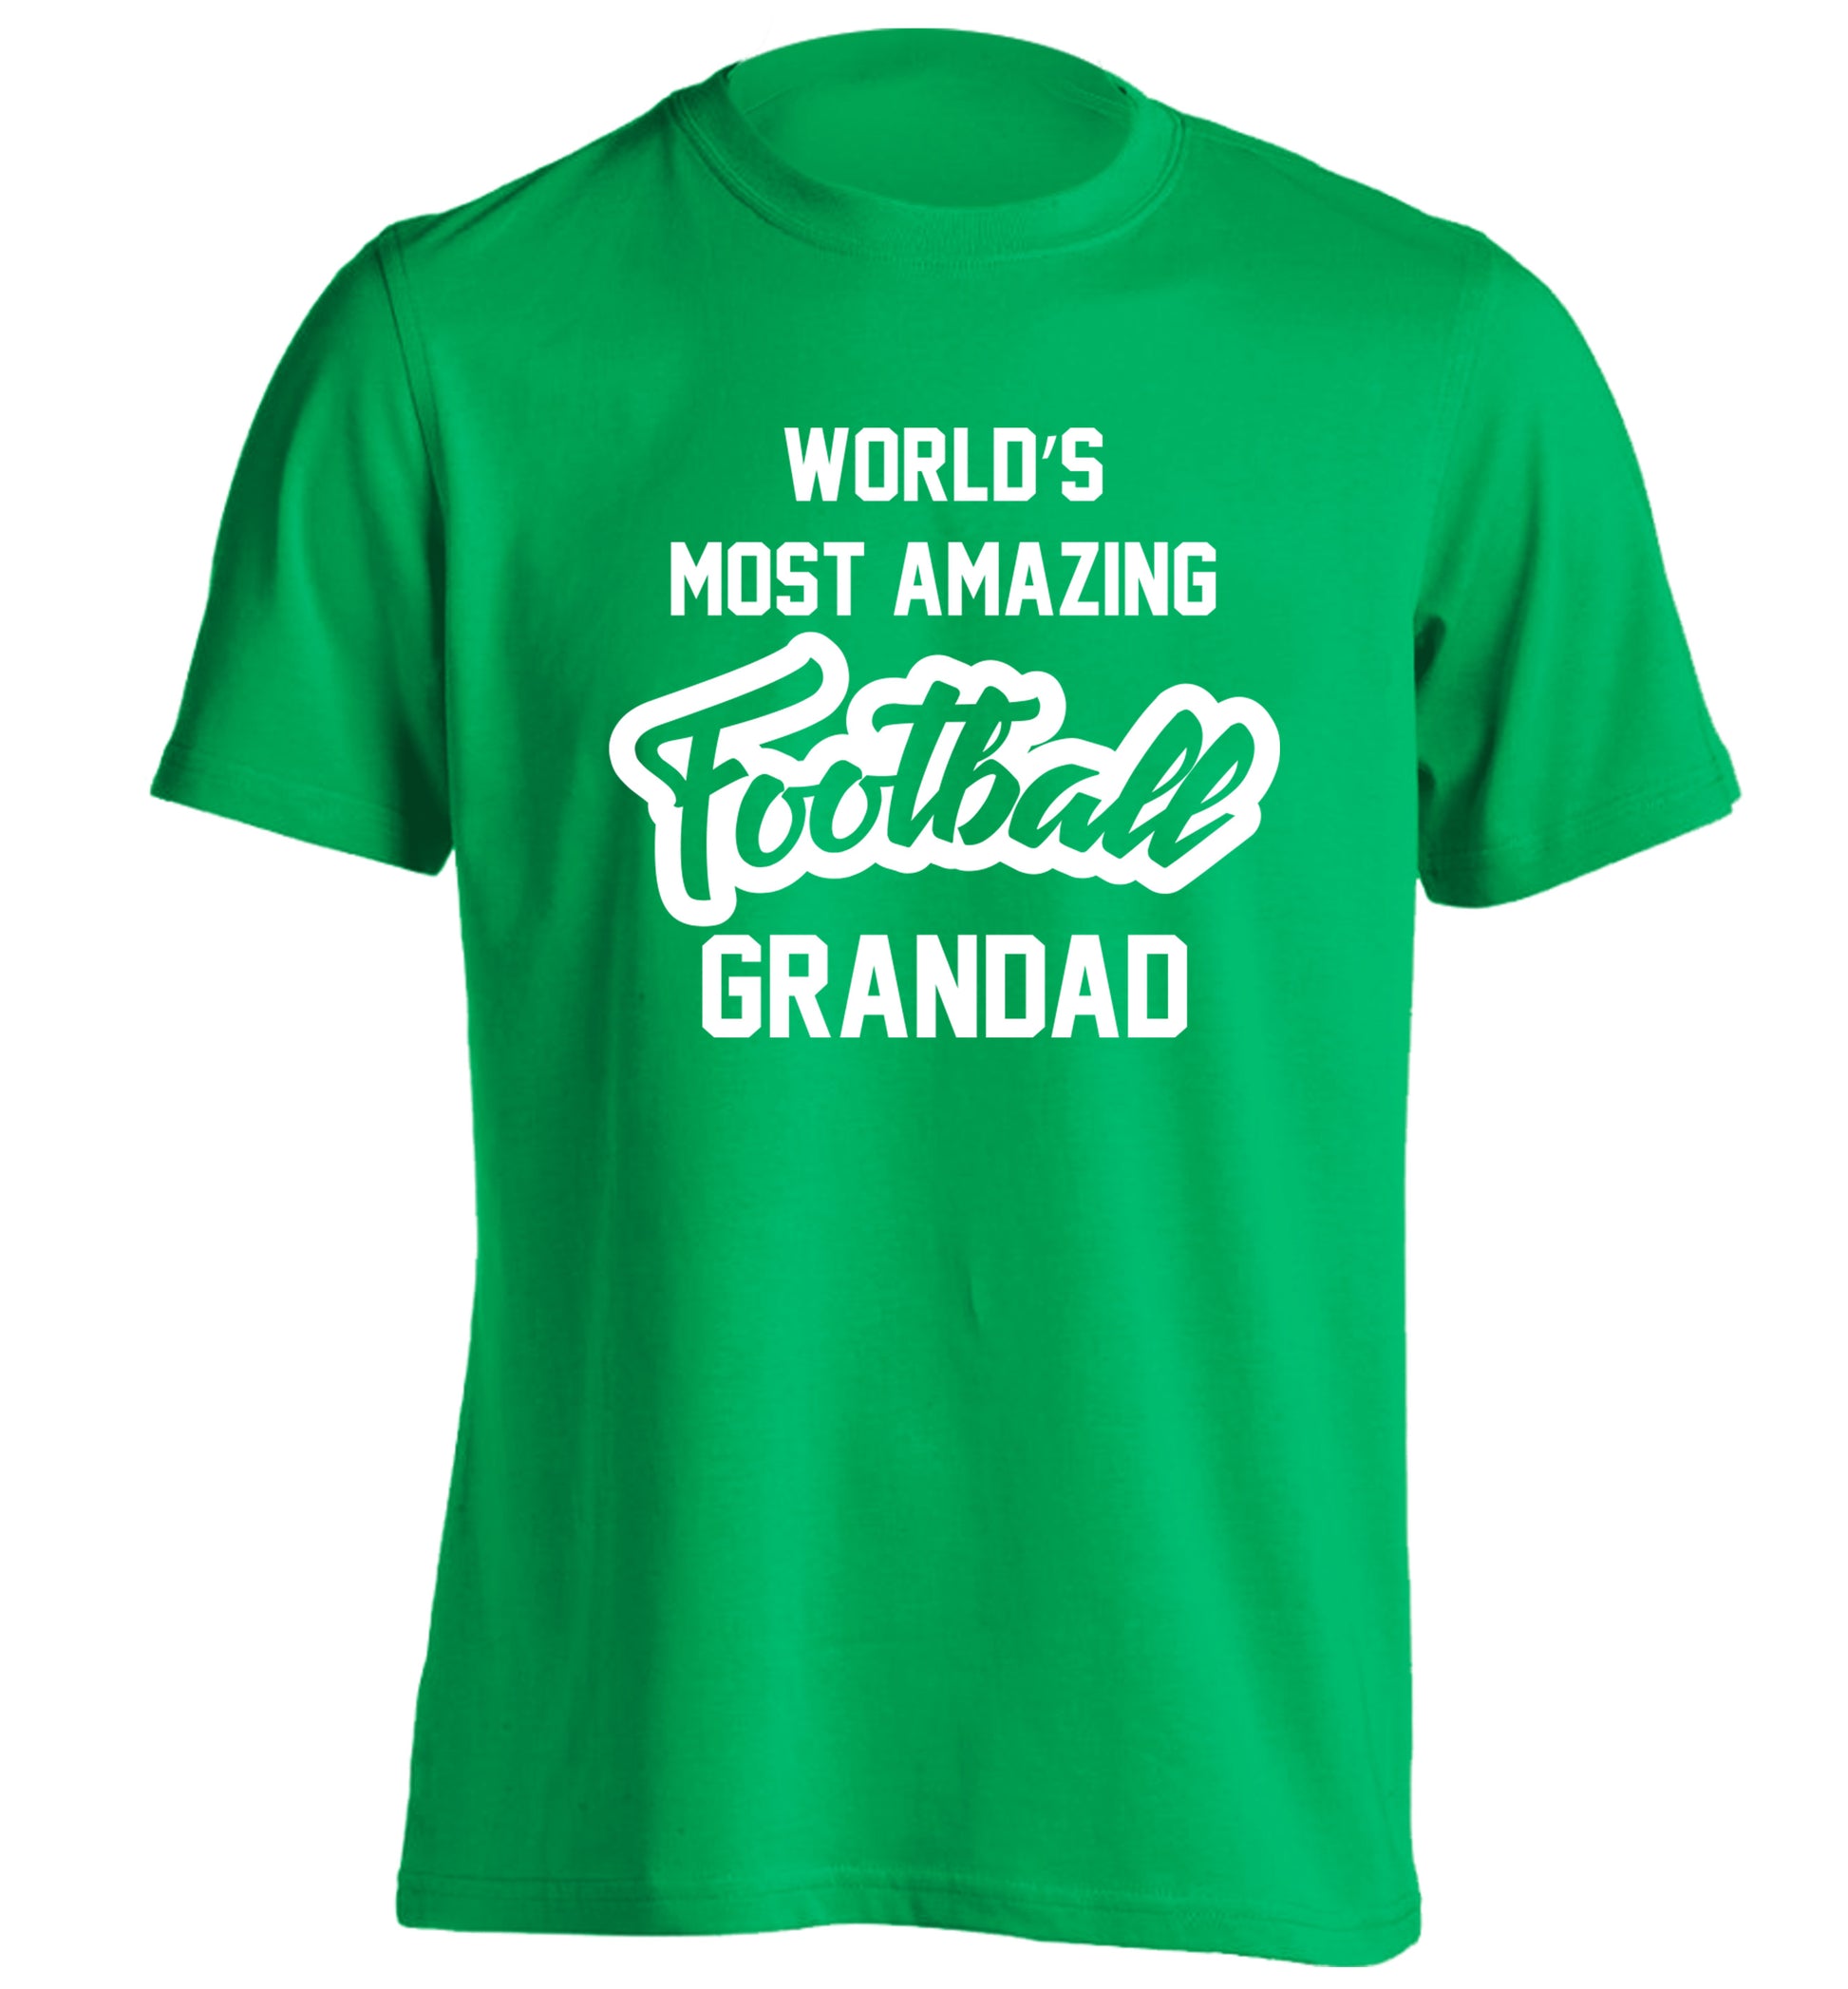 Worlds most amazing football grandad adults unisexgreen Tshirt 2XL